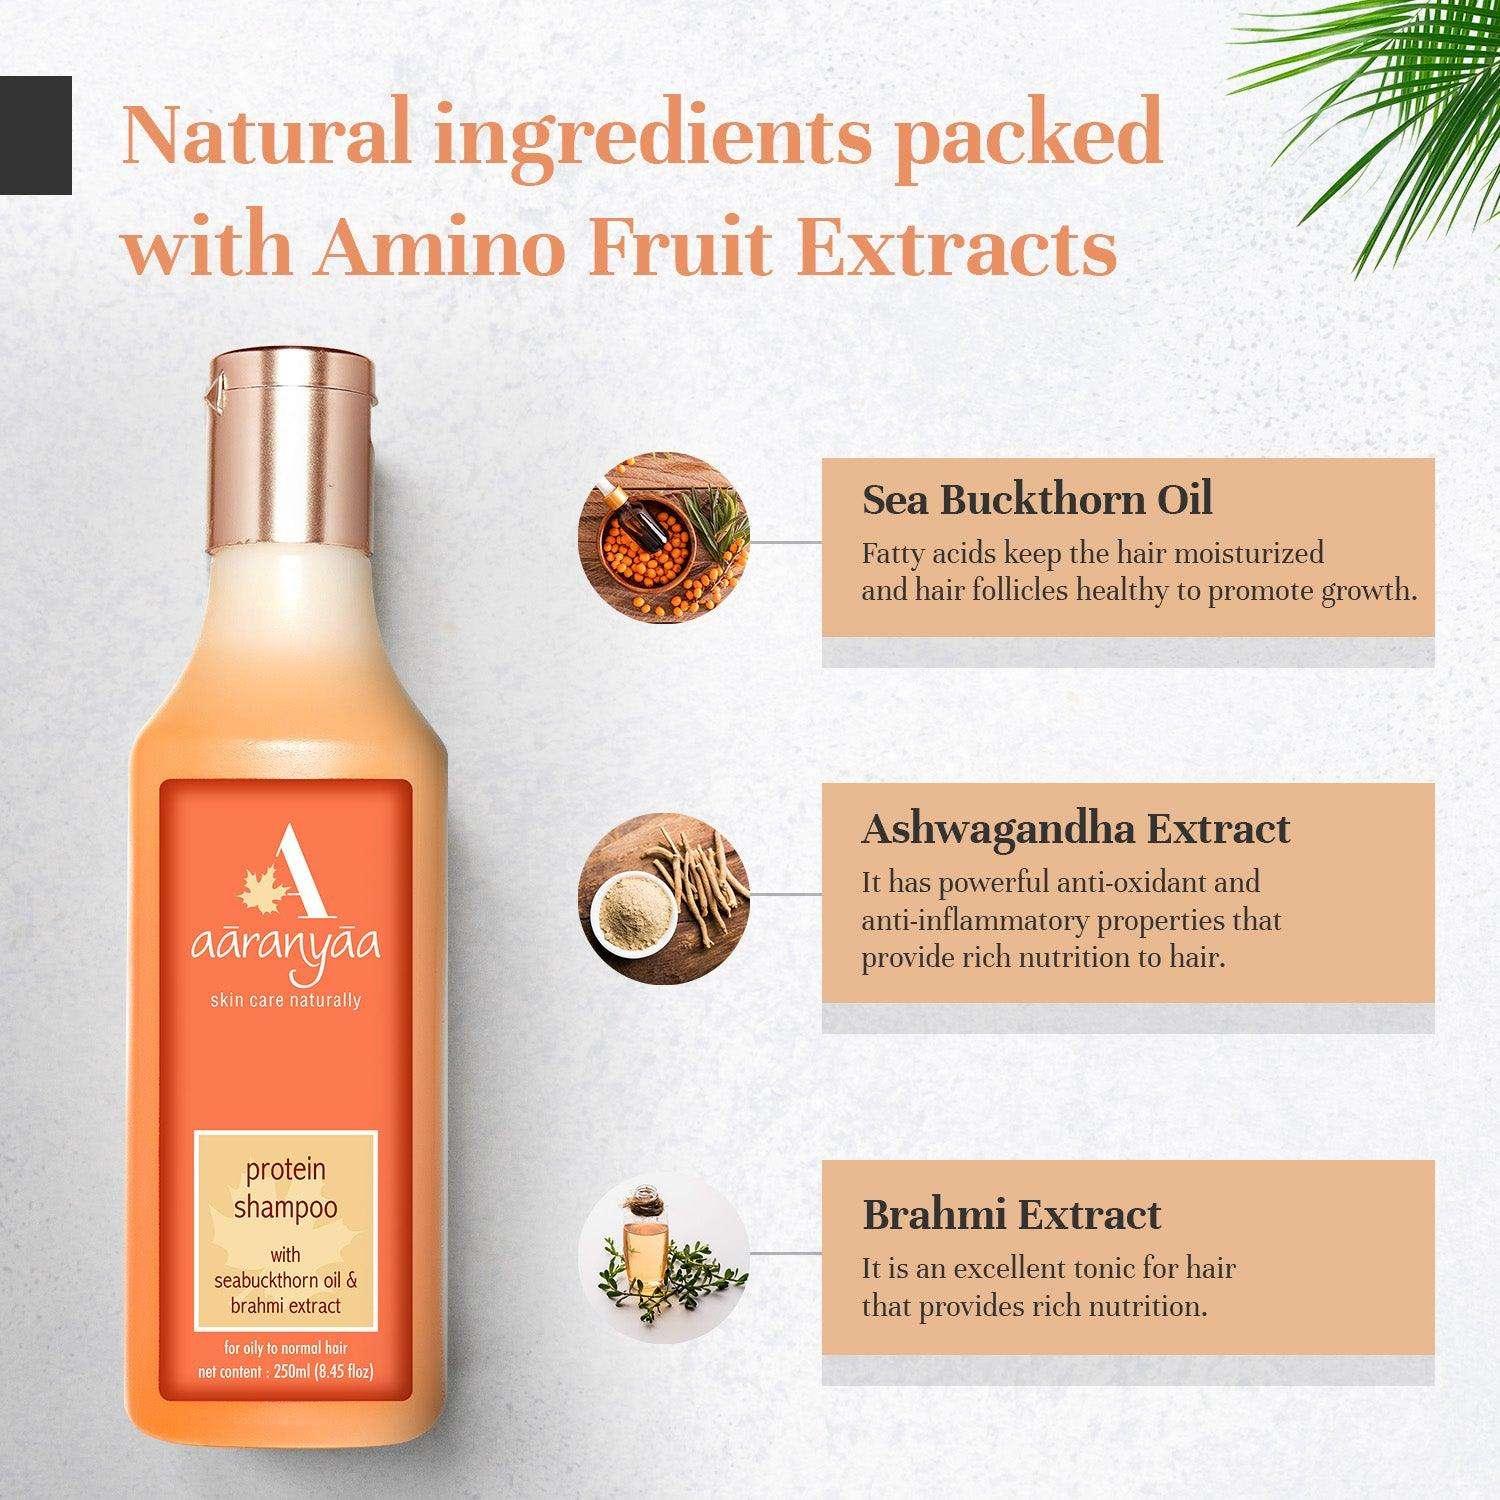 Protein Conditioning Shampoo With Seabuckthorn Oil & Brahmi Extract - aaranyaa skincare